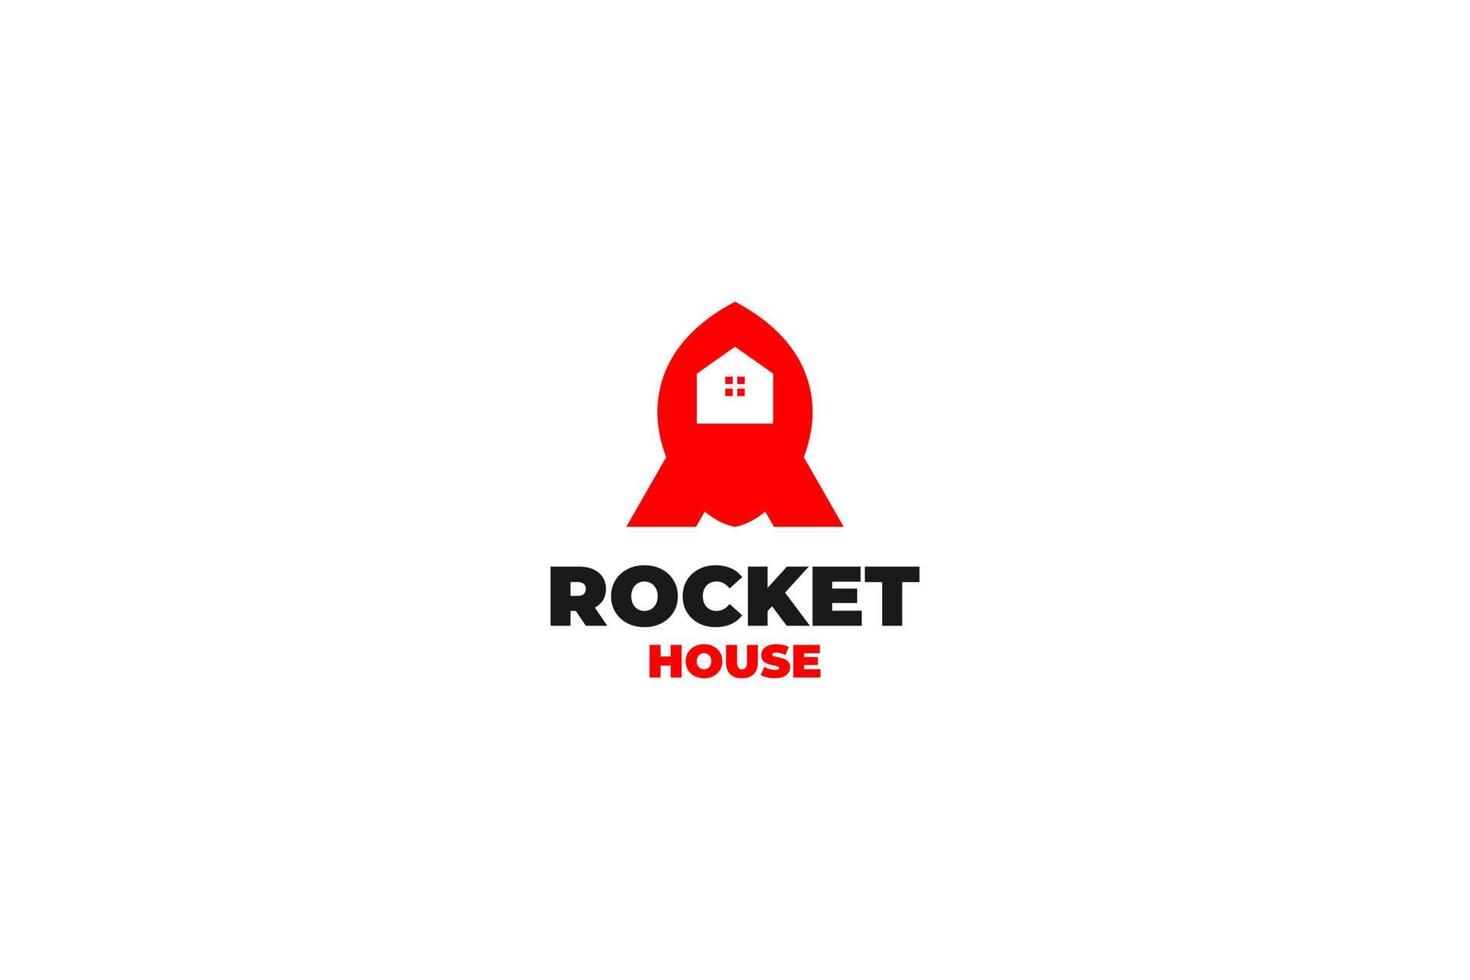 Flat rocket house logo design vector illustration